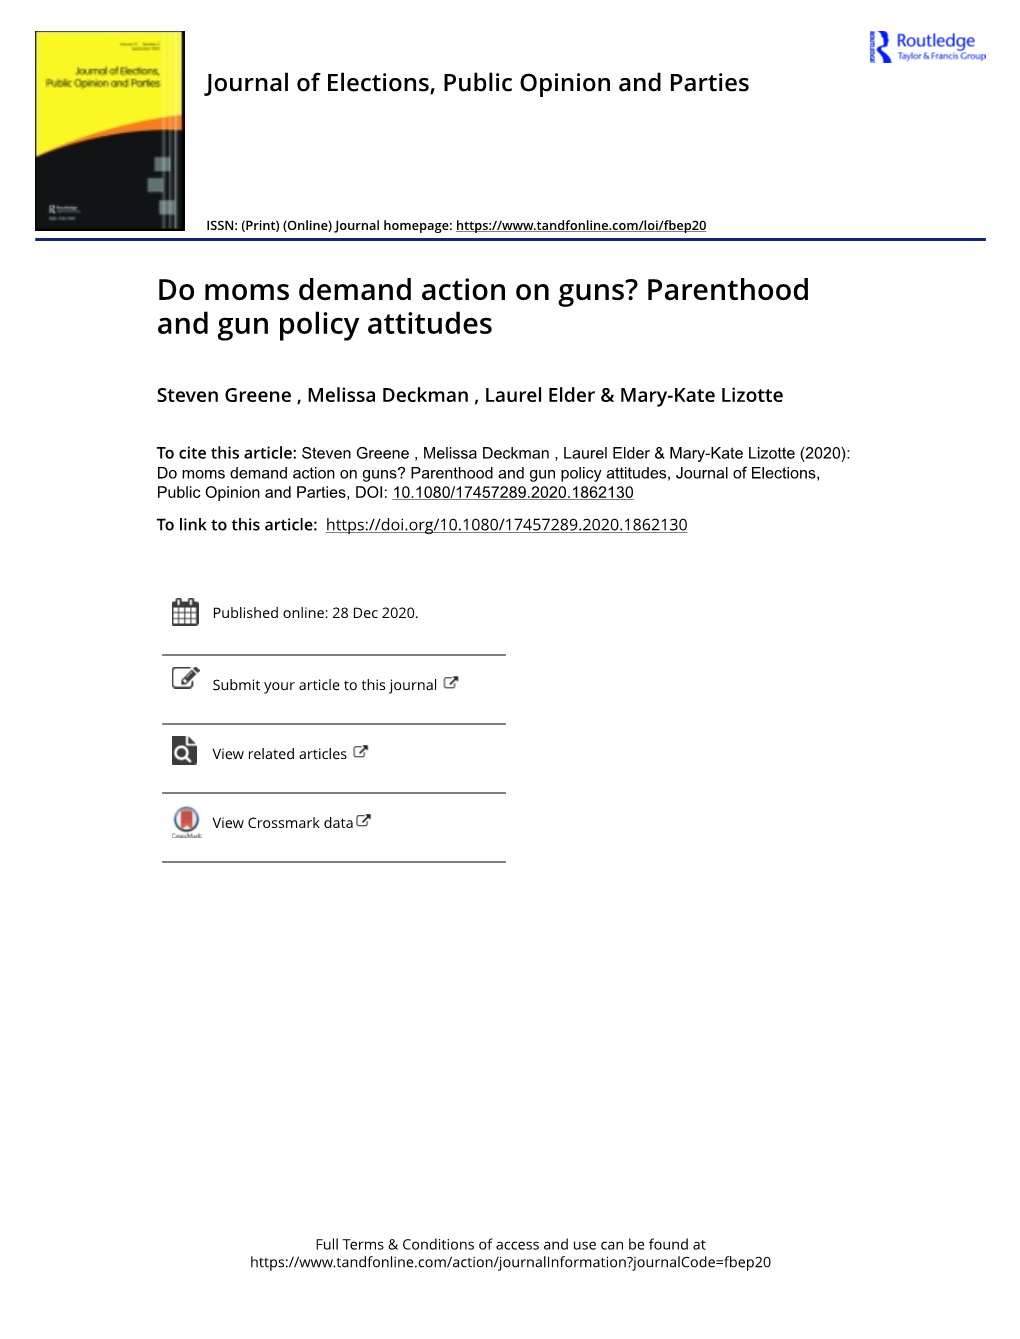 Parenthood and Gun Policy Attitudes